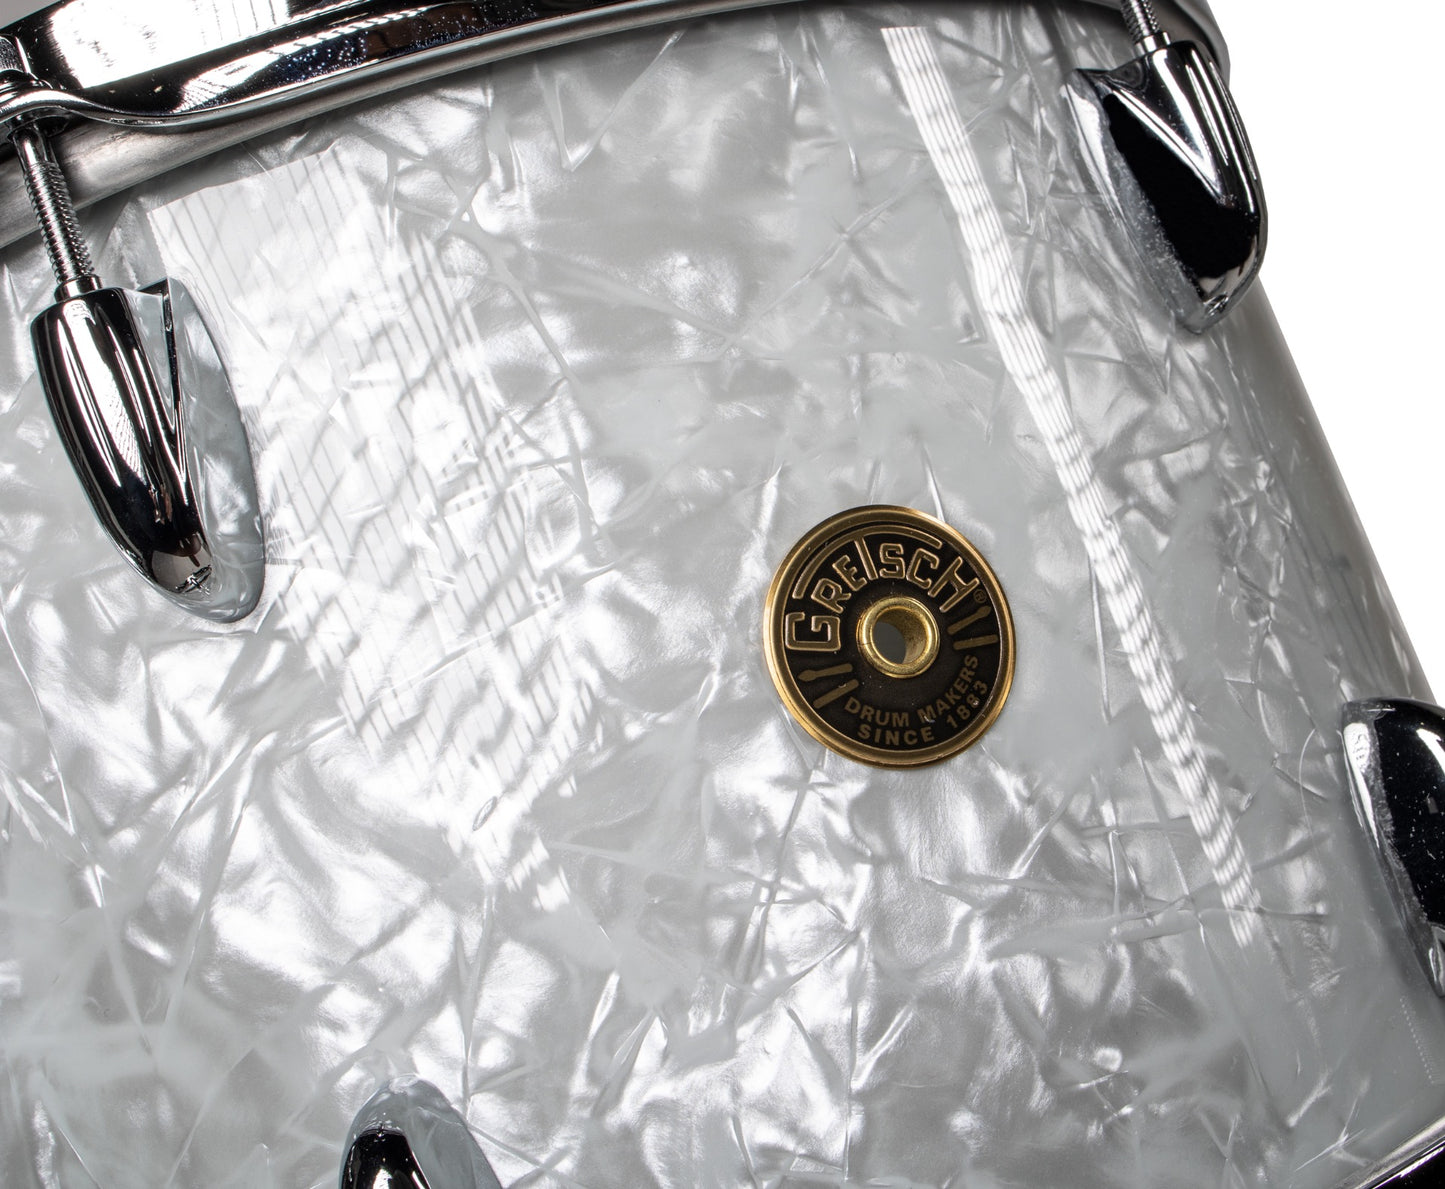 Gretsch Broadkaster Series 3-Piece Drum Kit - 60’s Marine -No Snare -